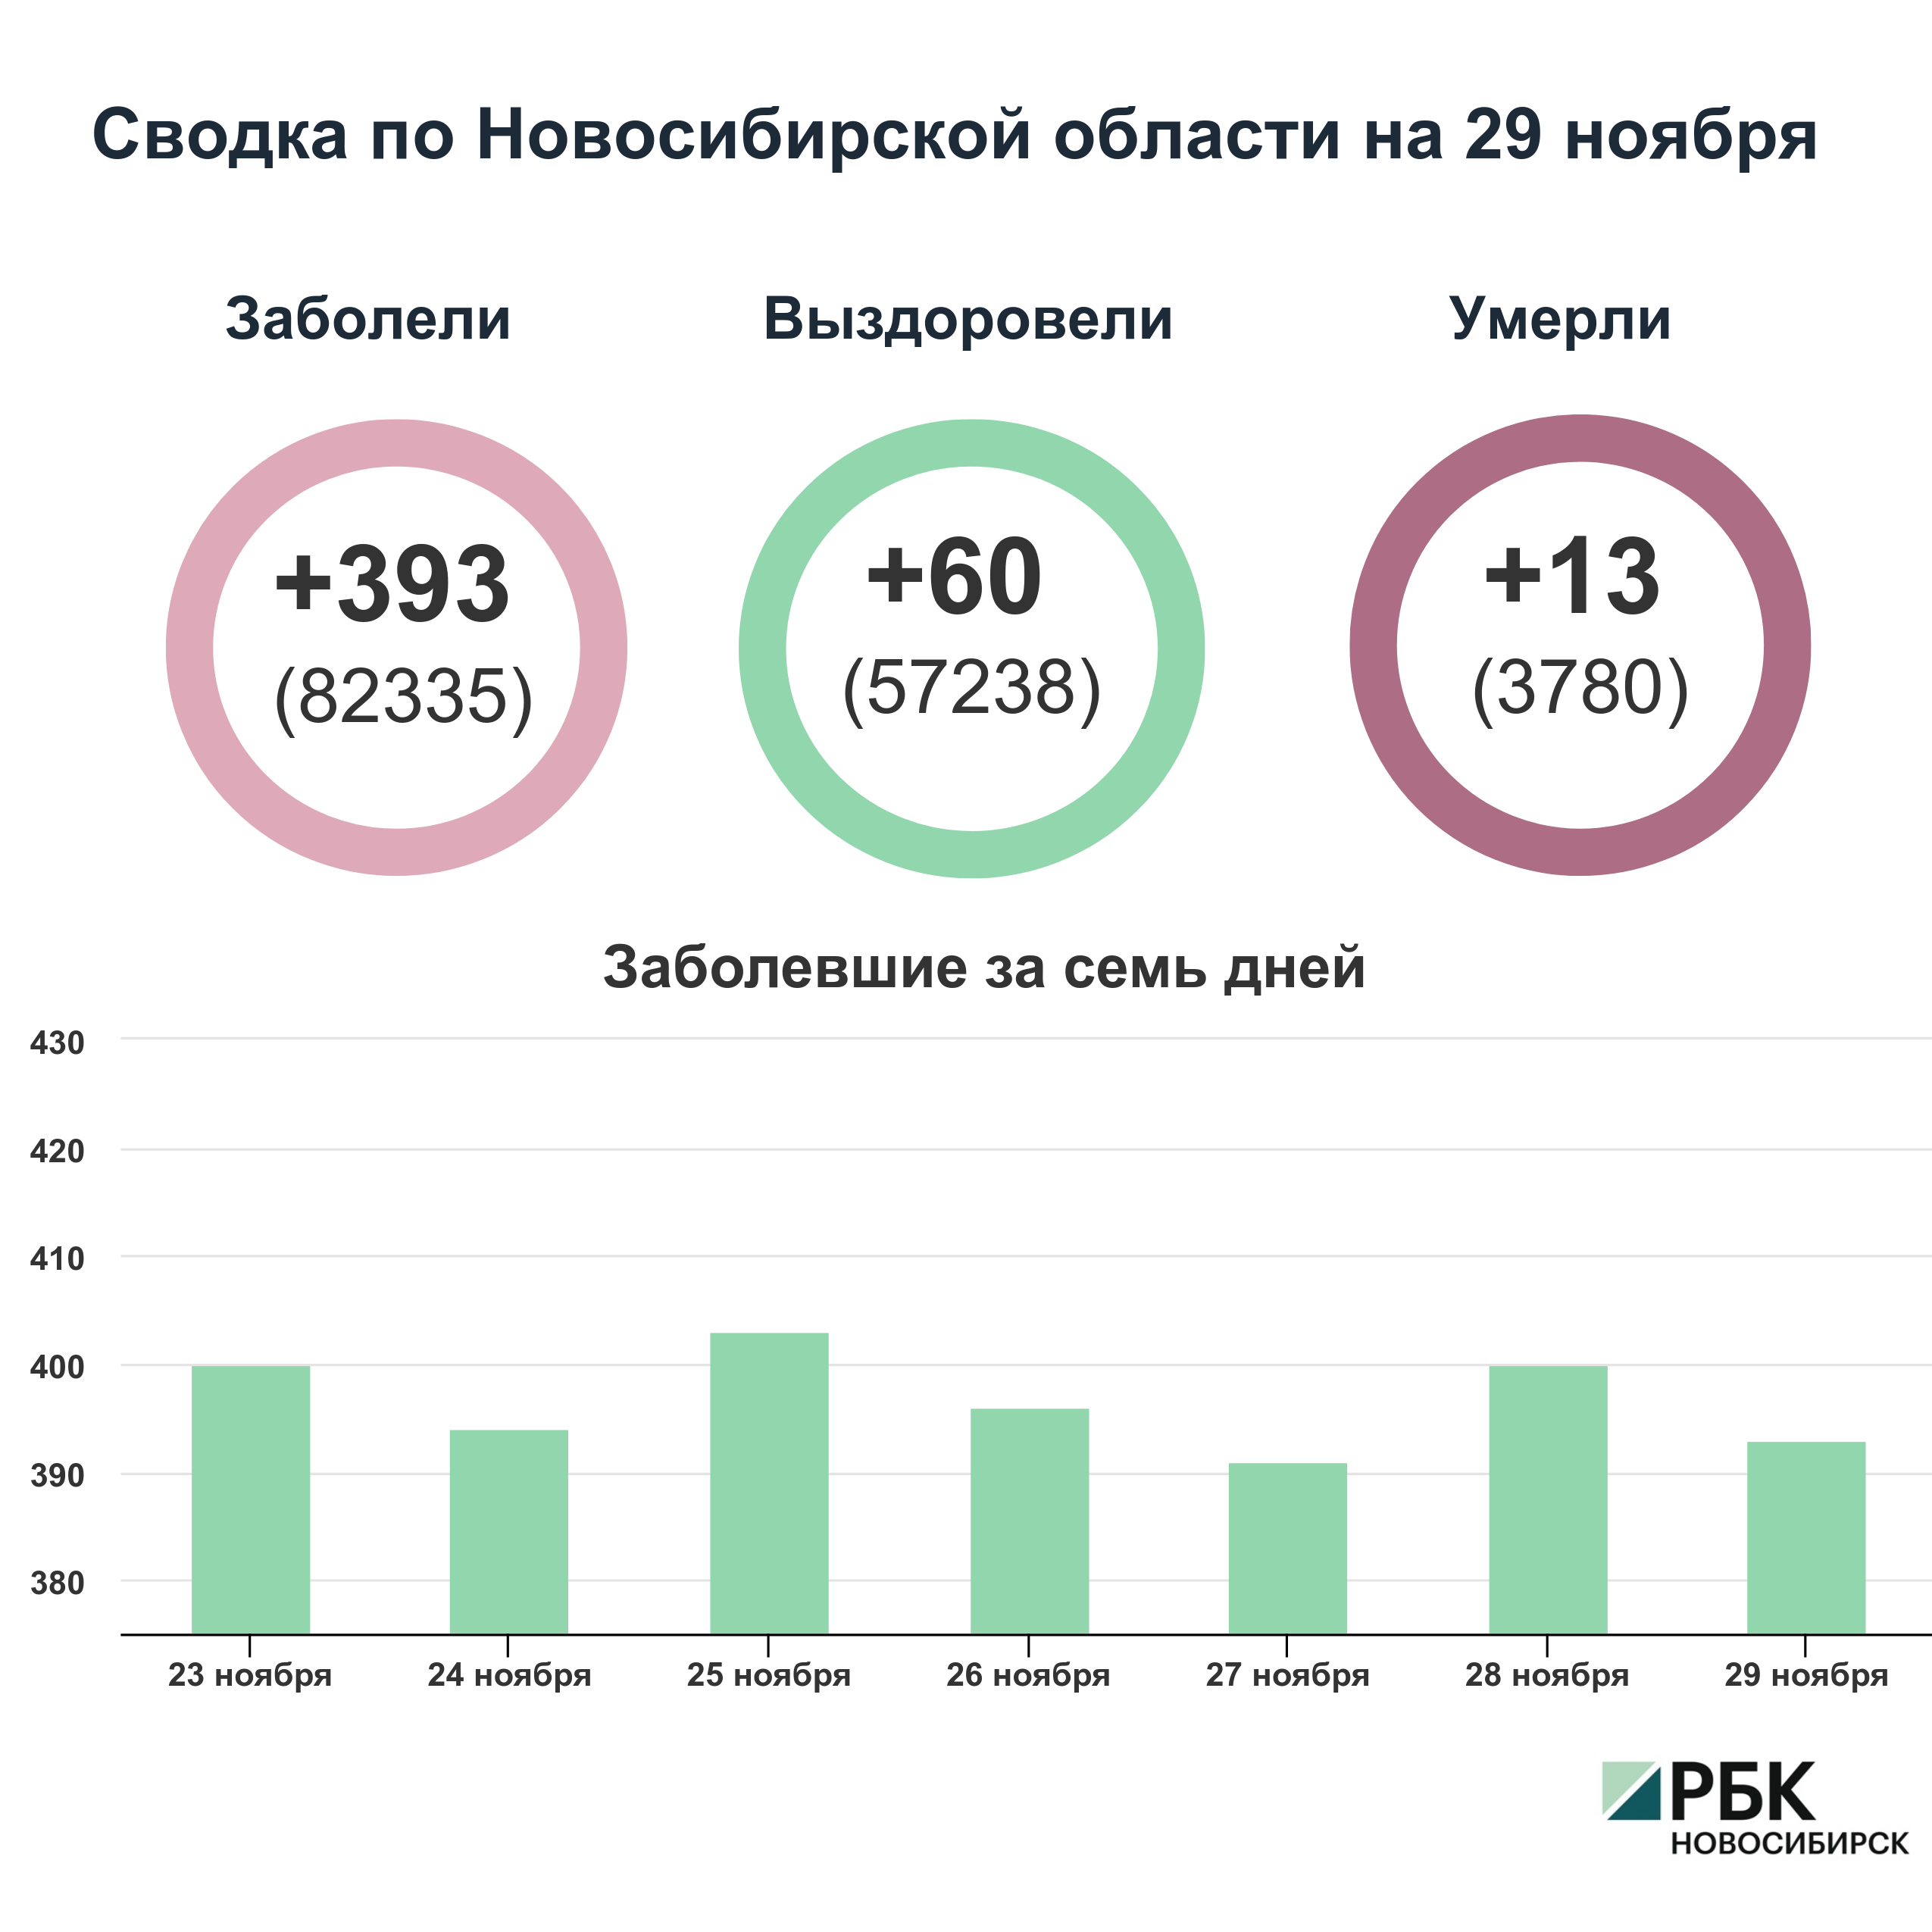 Коронавирус в Новосибирске: сводка на 29 ноября